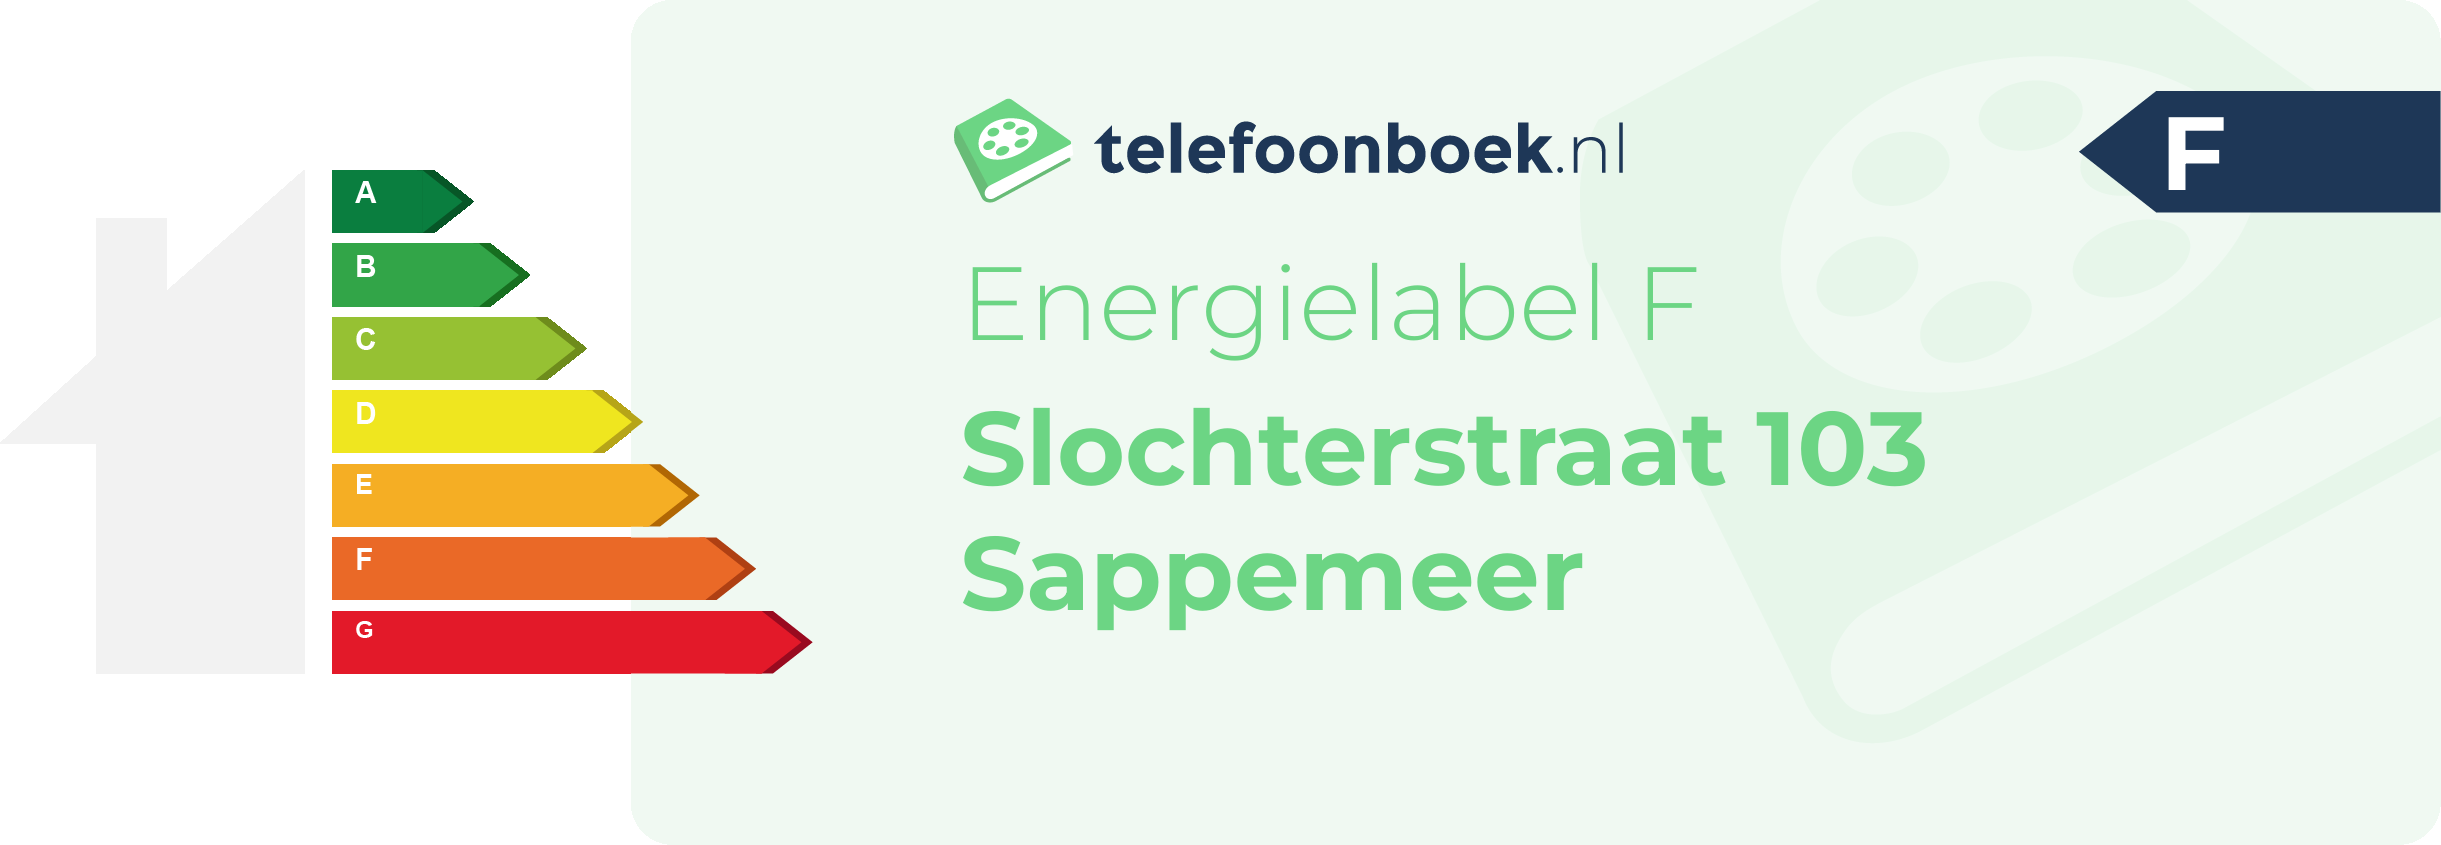 Energielabel Slochterstraat 103 Sappemeer